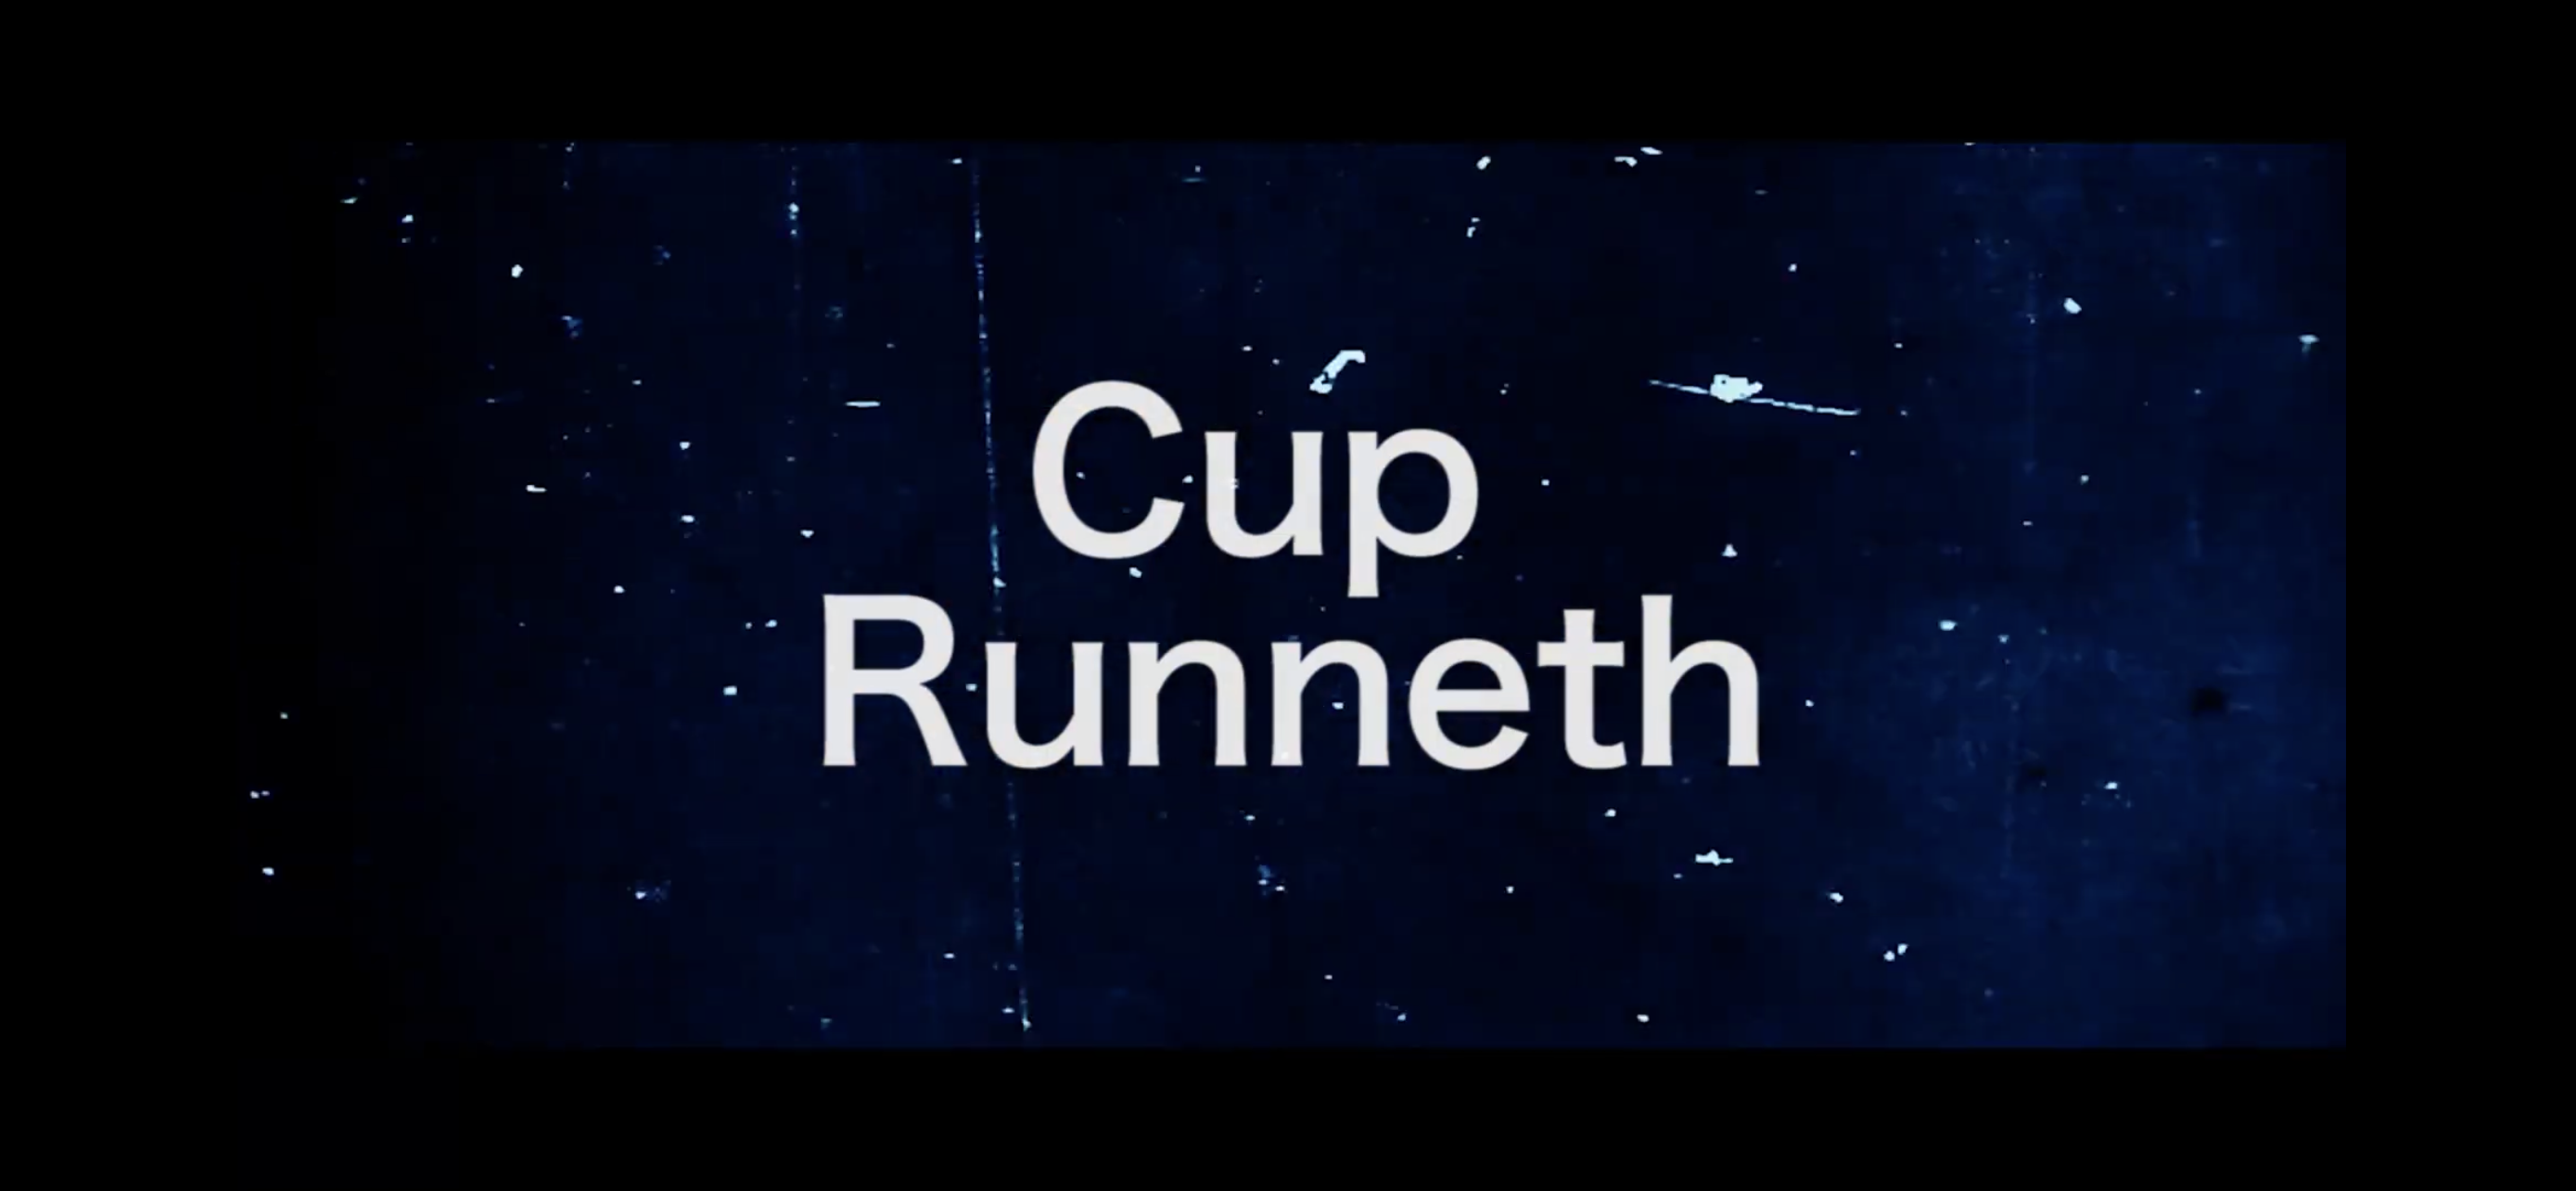 Lena Jackson "Cup Runneth" prod. by Nottz | VIDEO